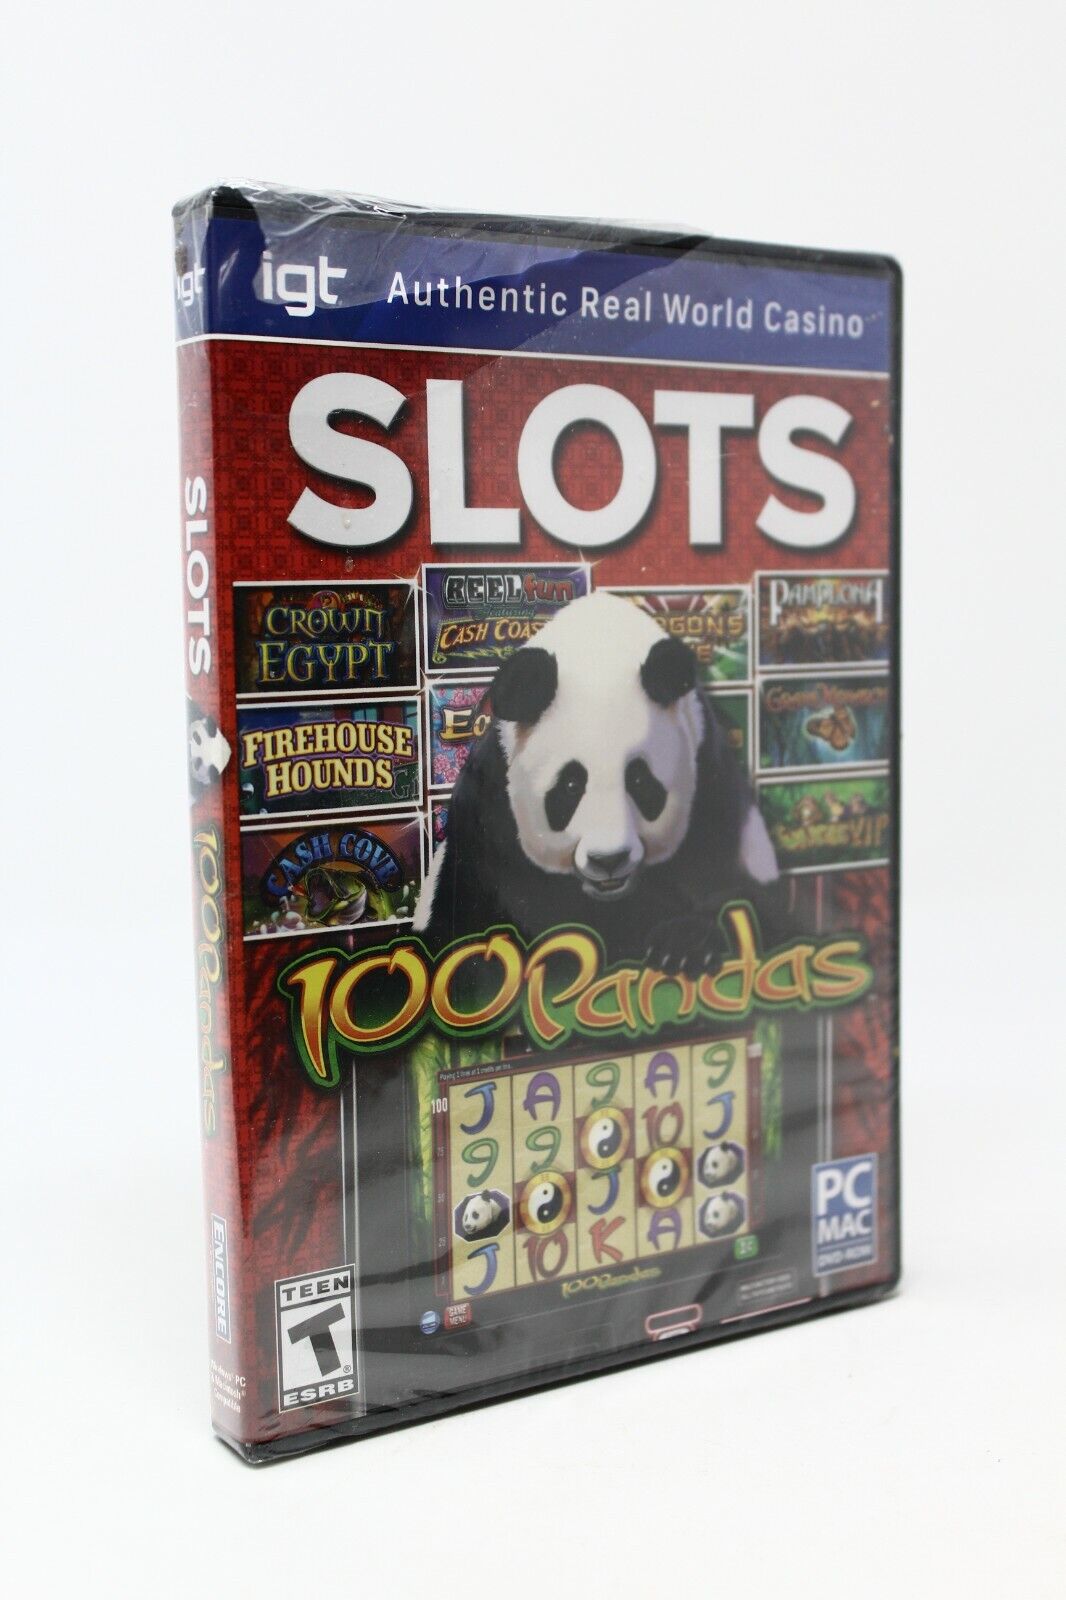 IGT Slots: 100 Pandas - PC - NEW/Sealed - See description